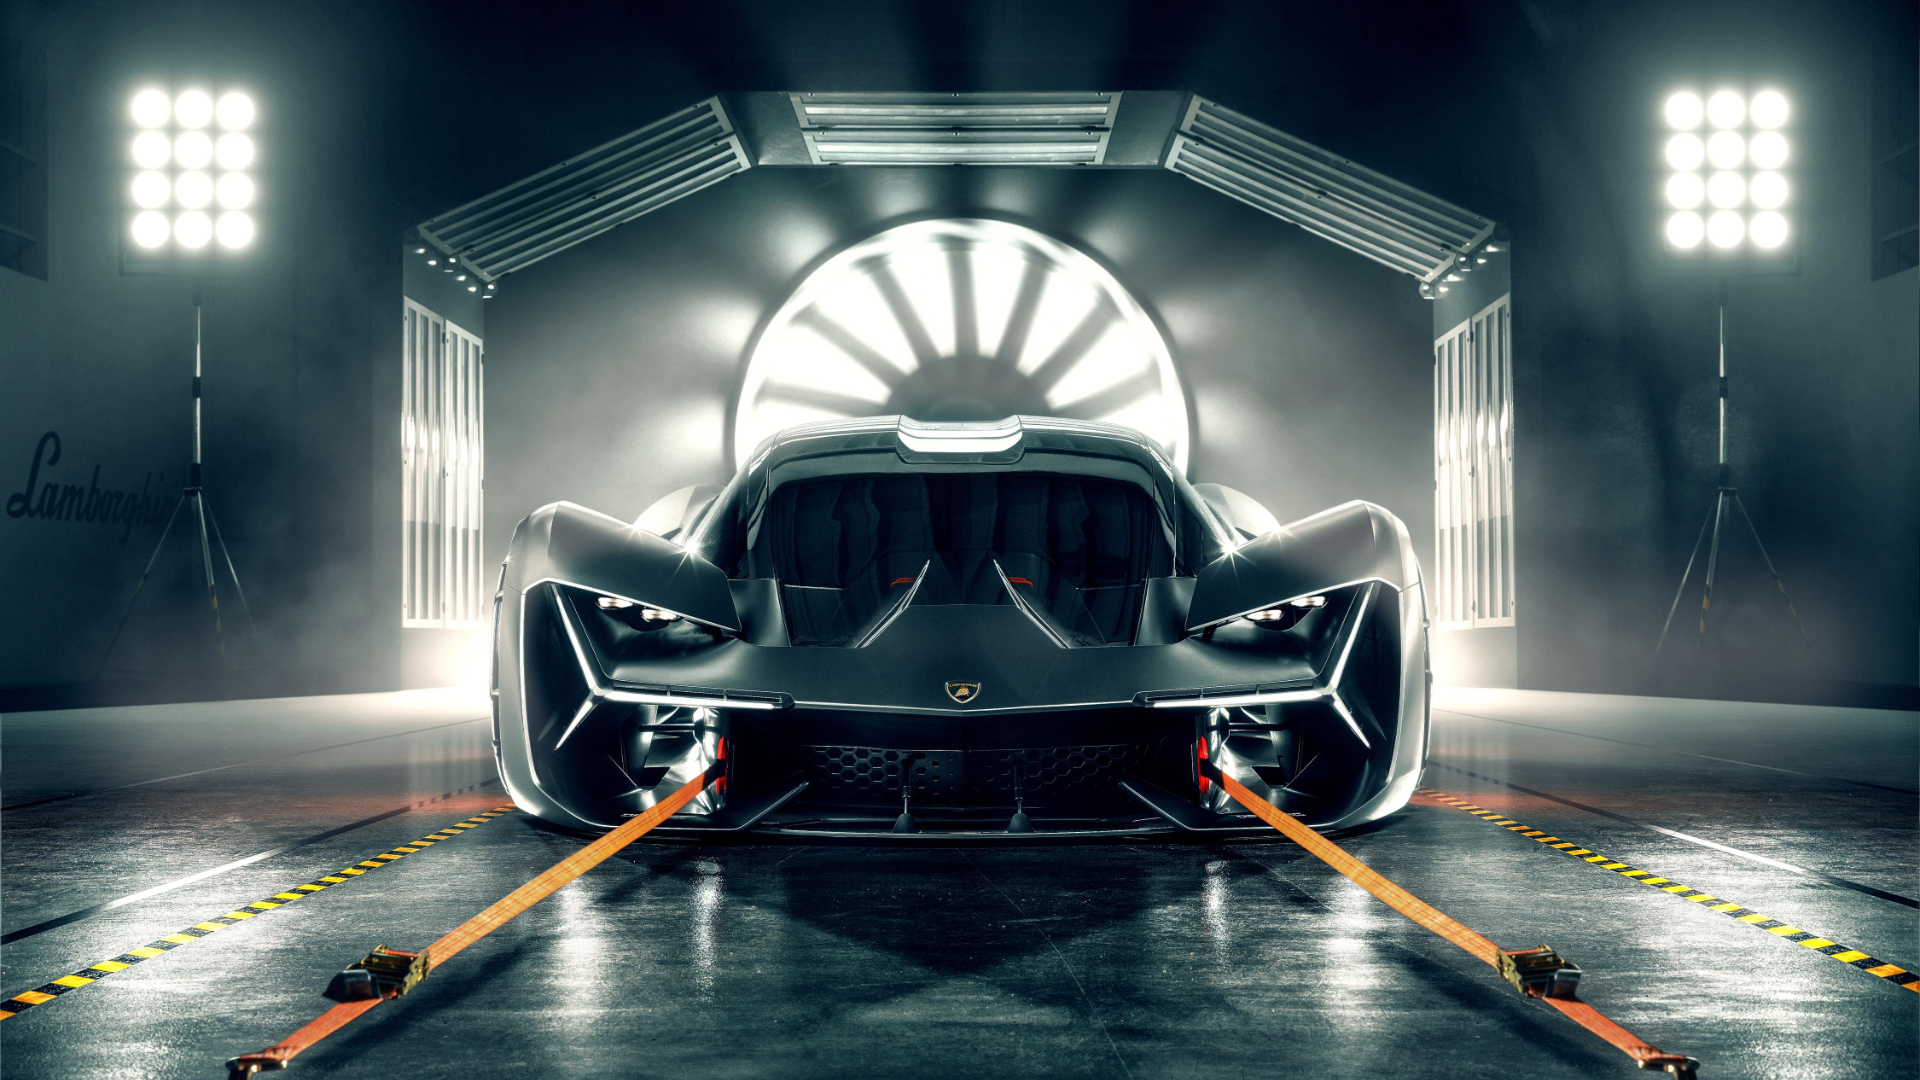 Lamborghini Concept Cars Hd Wallpapers Download